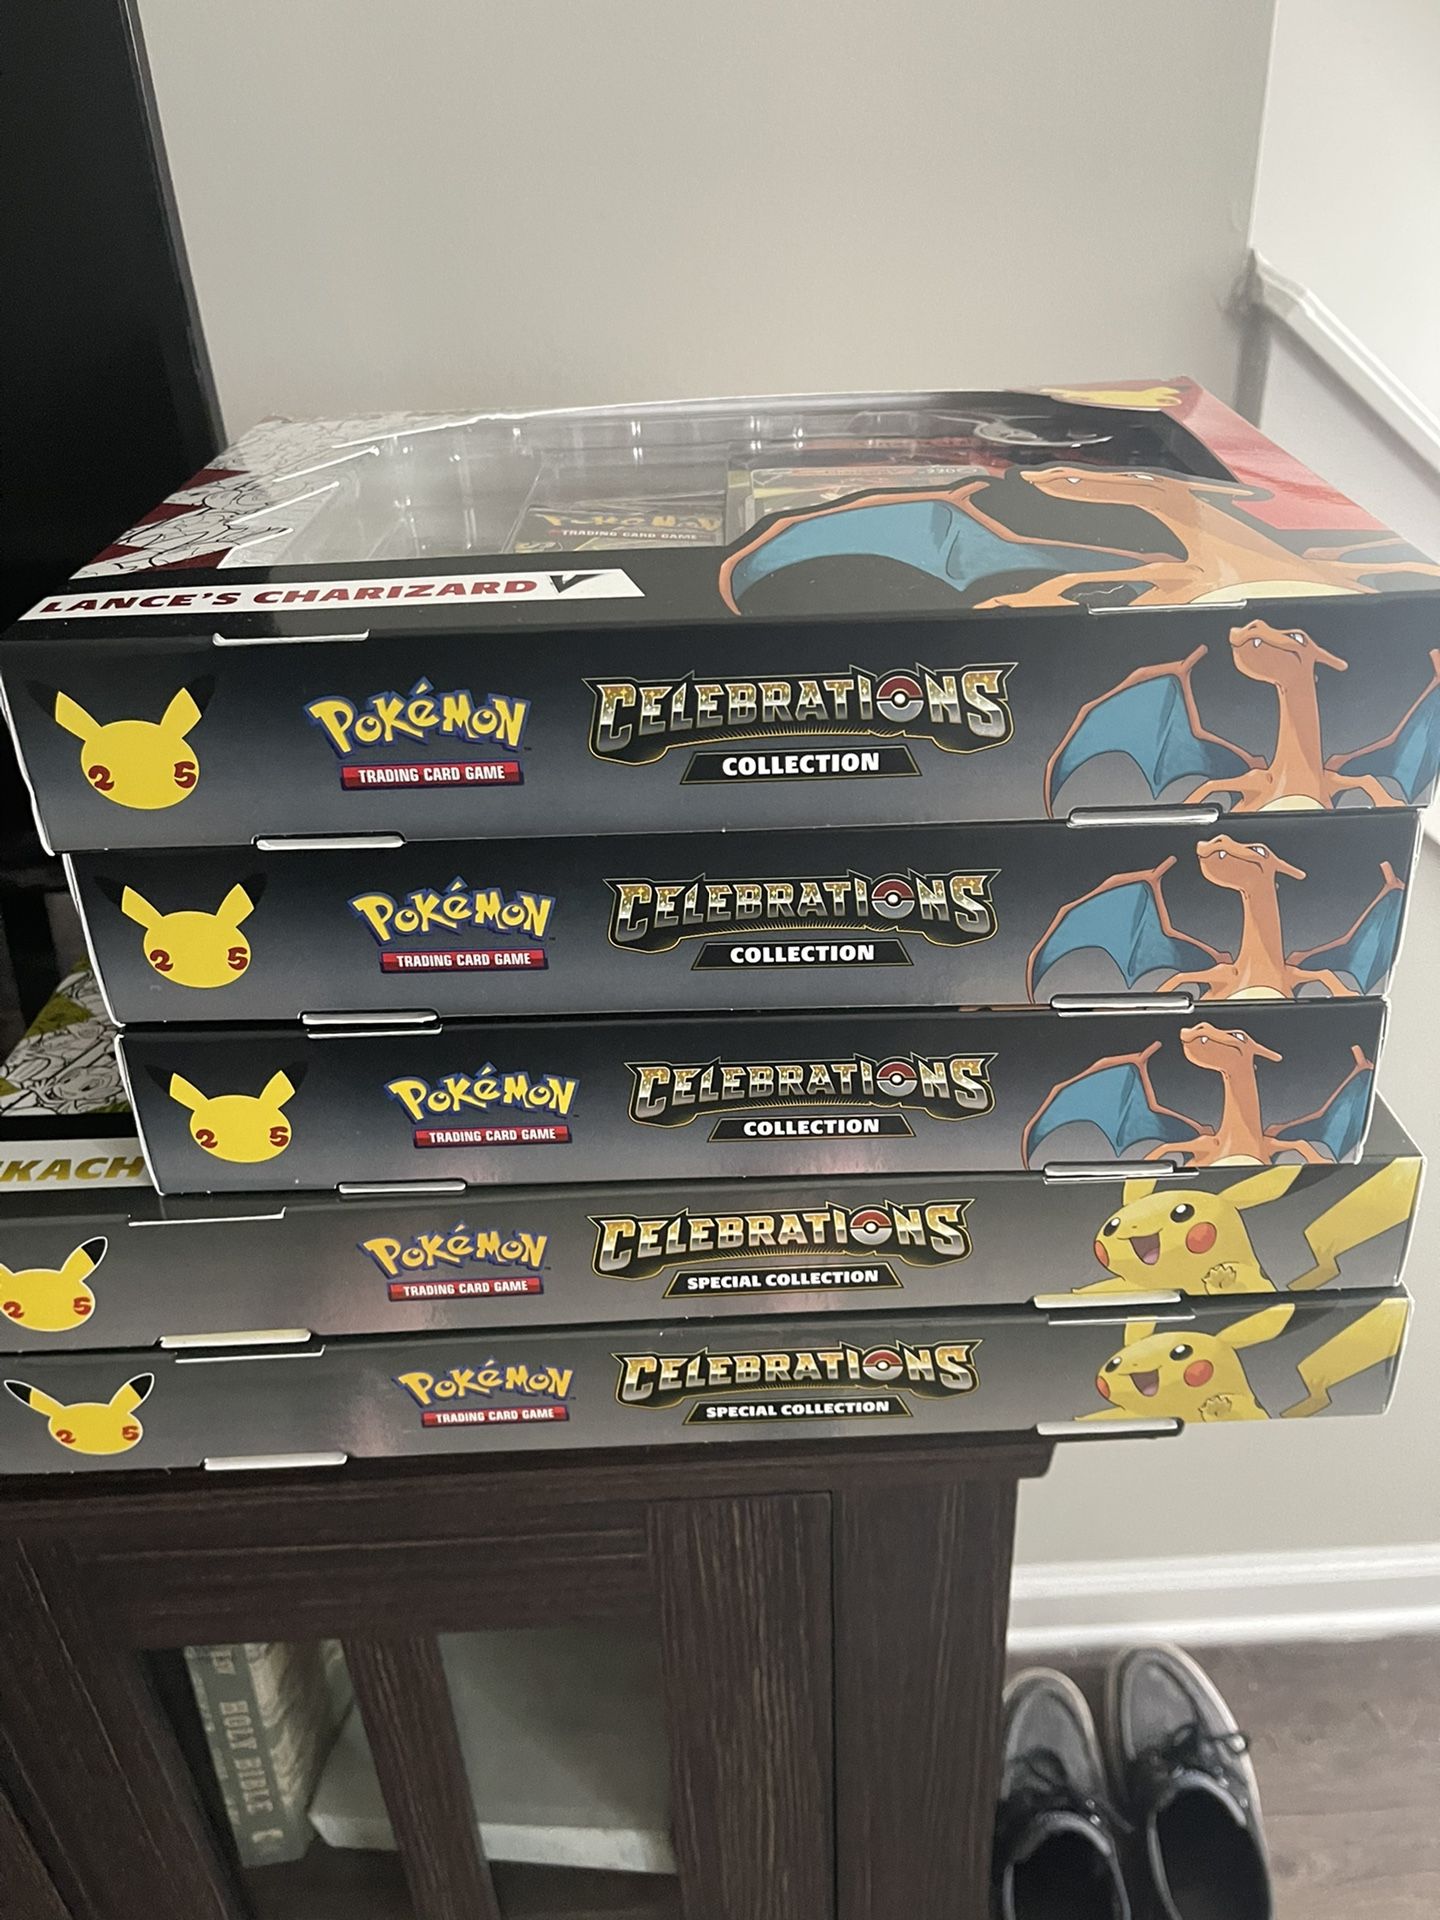 Pokémon Celebration boxes